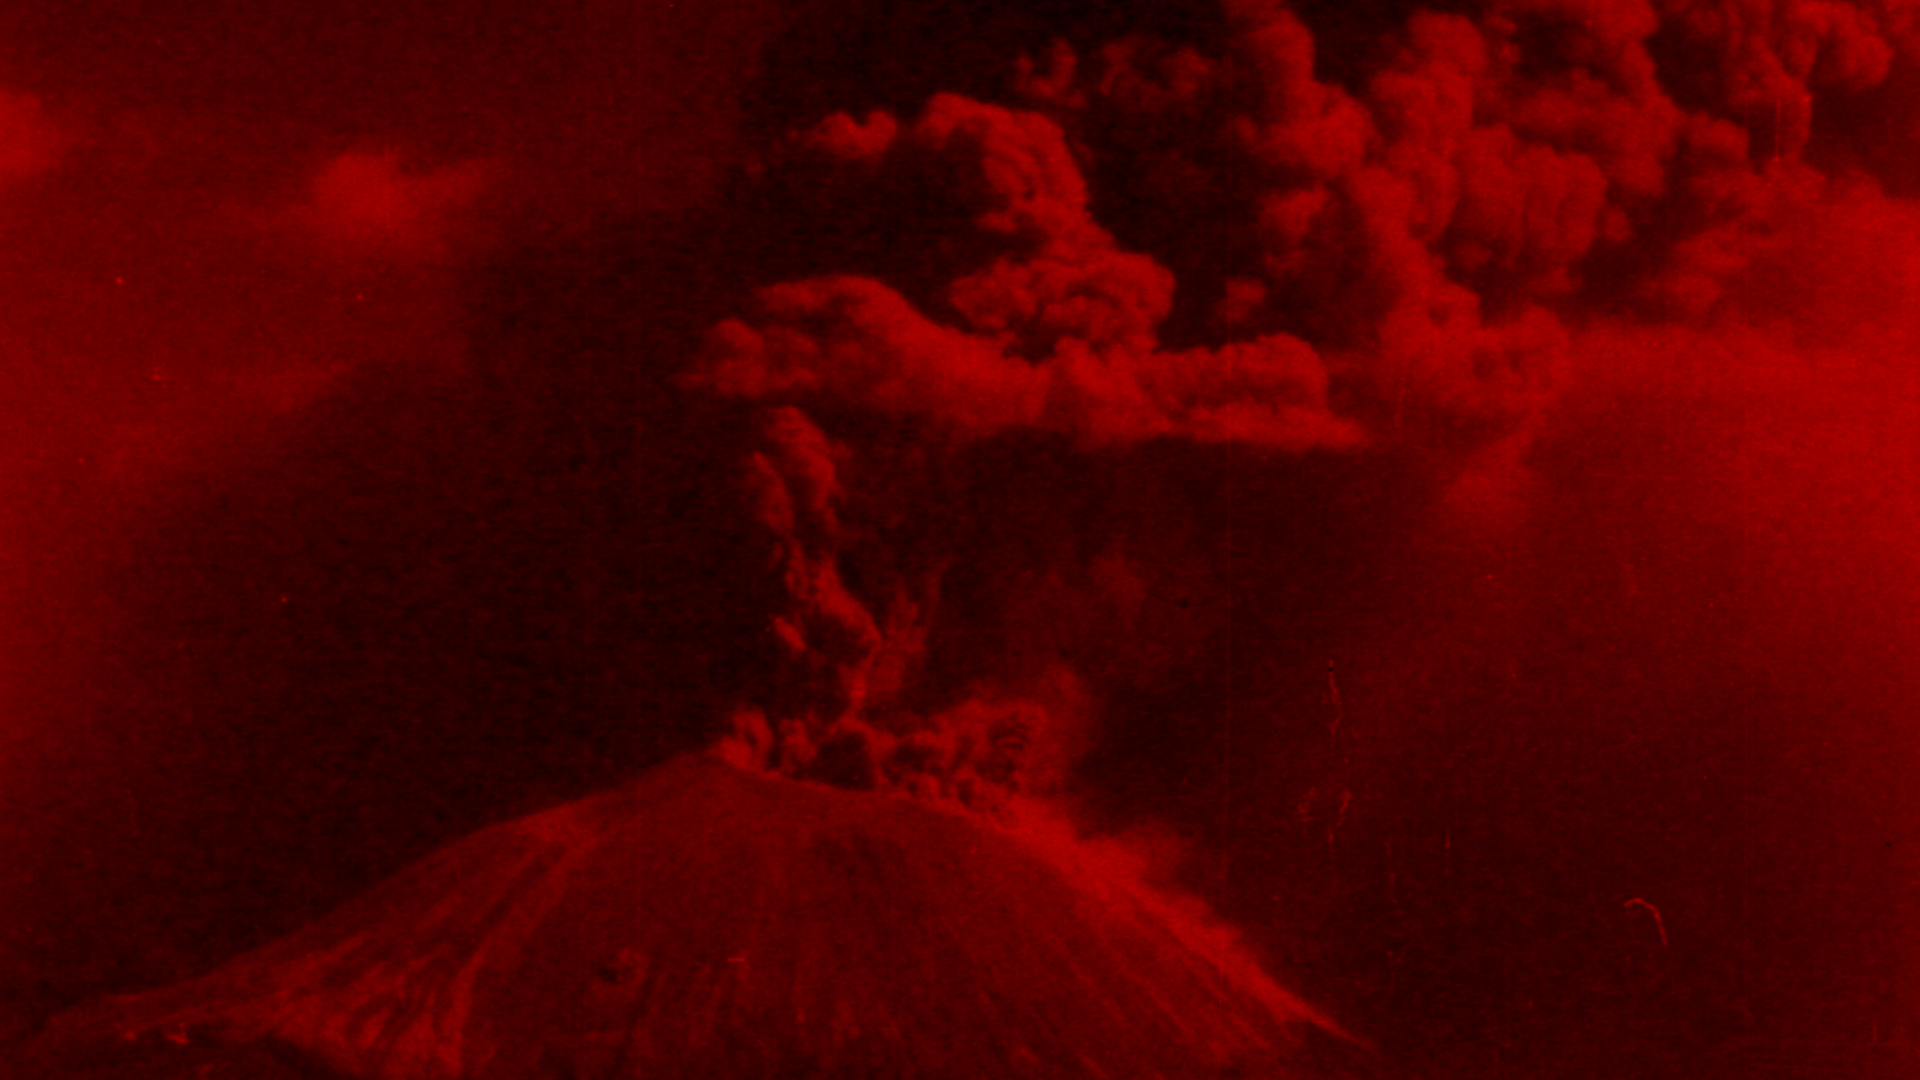 Monochromatic red image of volcano.